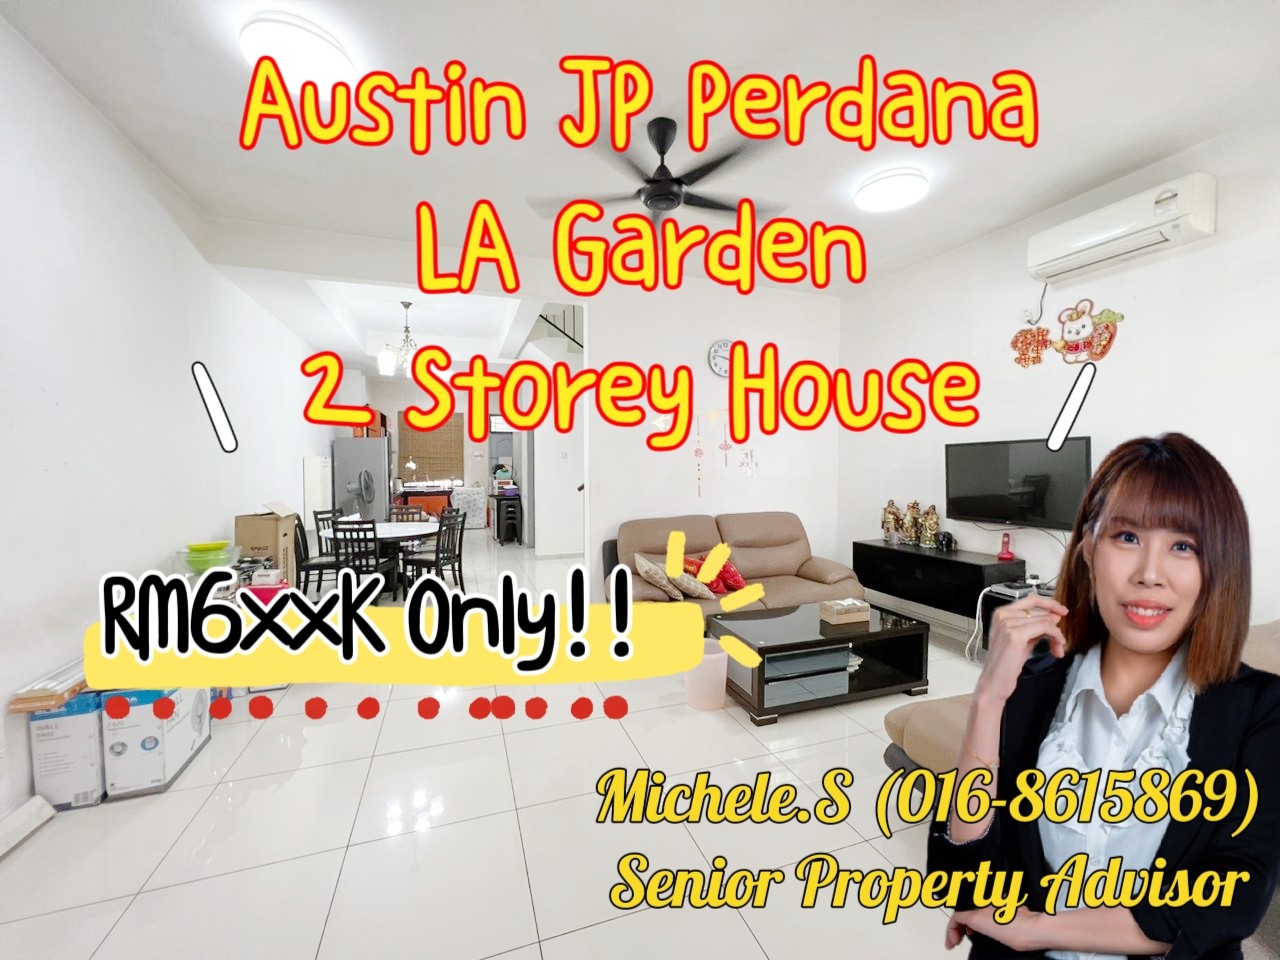 Mount Austin JP Perdana LA Garden 2 Storey House For Sale